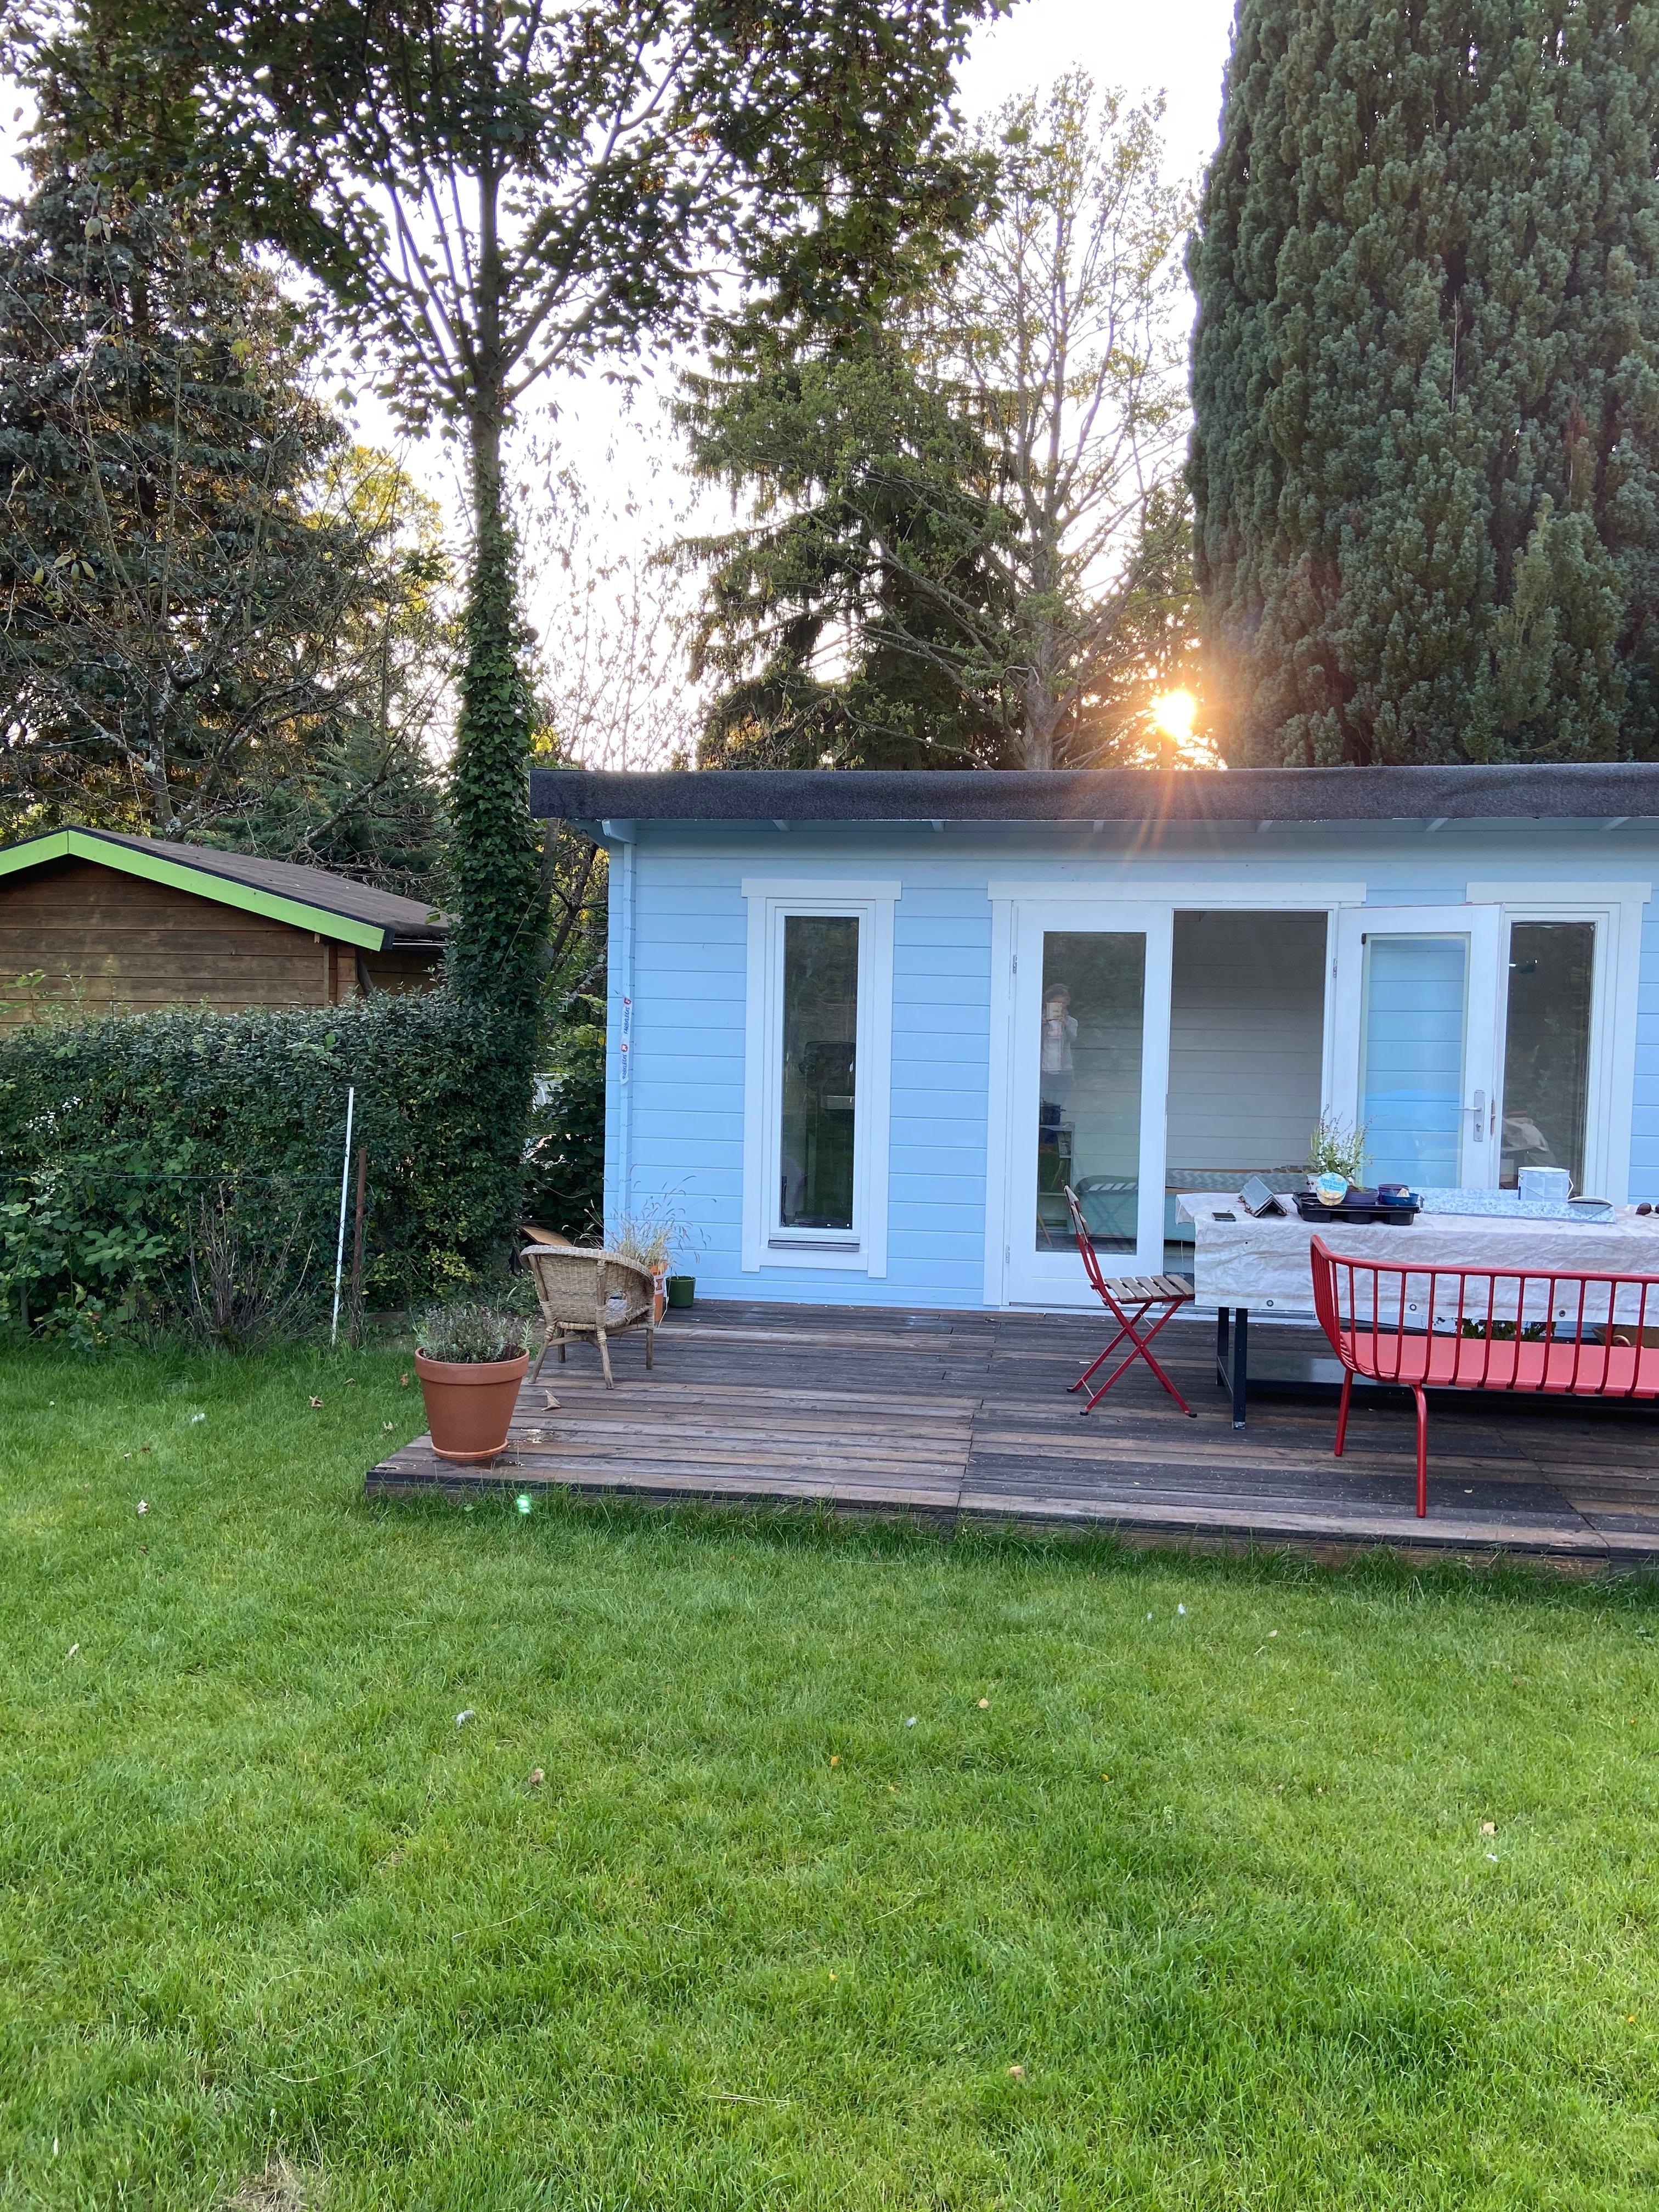 Endlich hat unser Gartenhaus den fertigen Anstrich
#gartenhaus #Schrebergarten #gartenliebe #inthecity #garten 